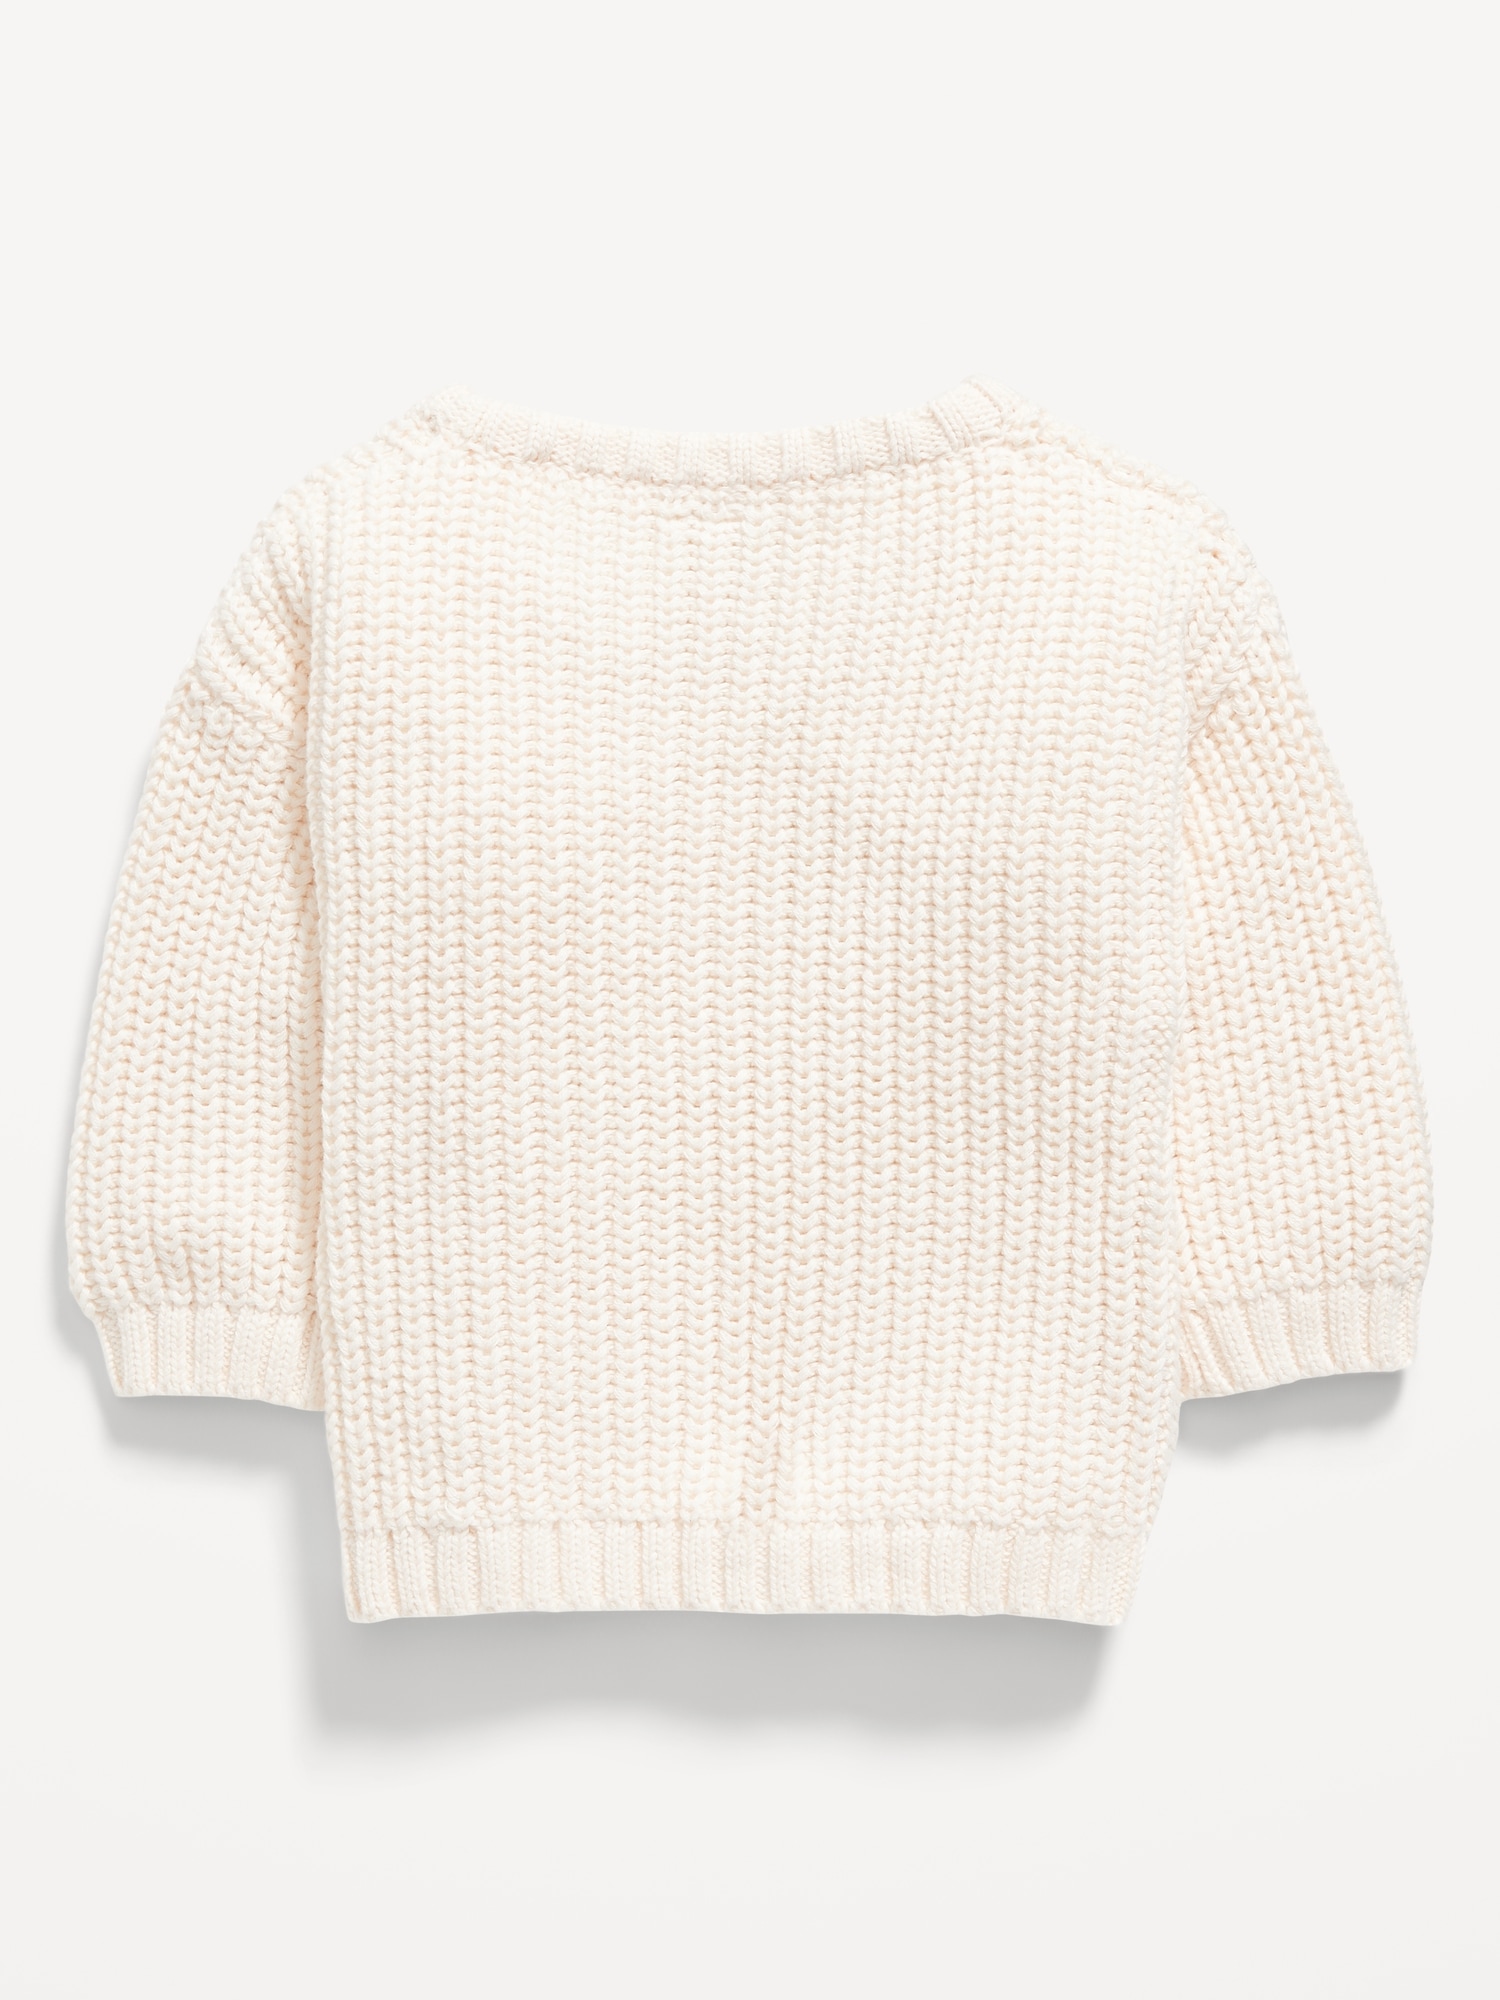 Organic Cotton Striped Baby Rib Knit - Navy + Cream